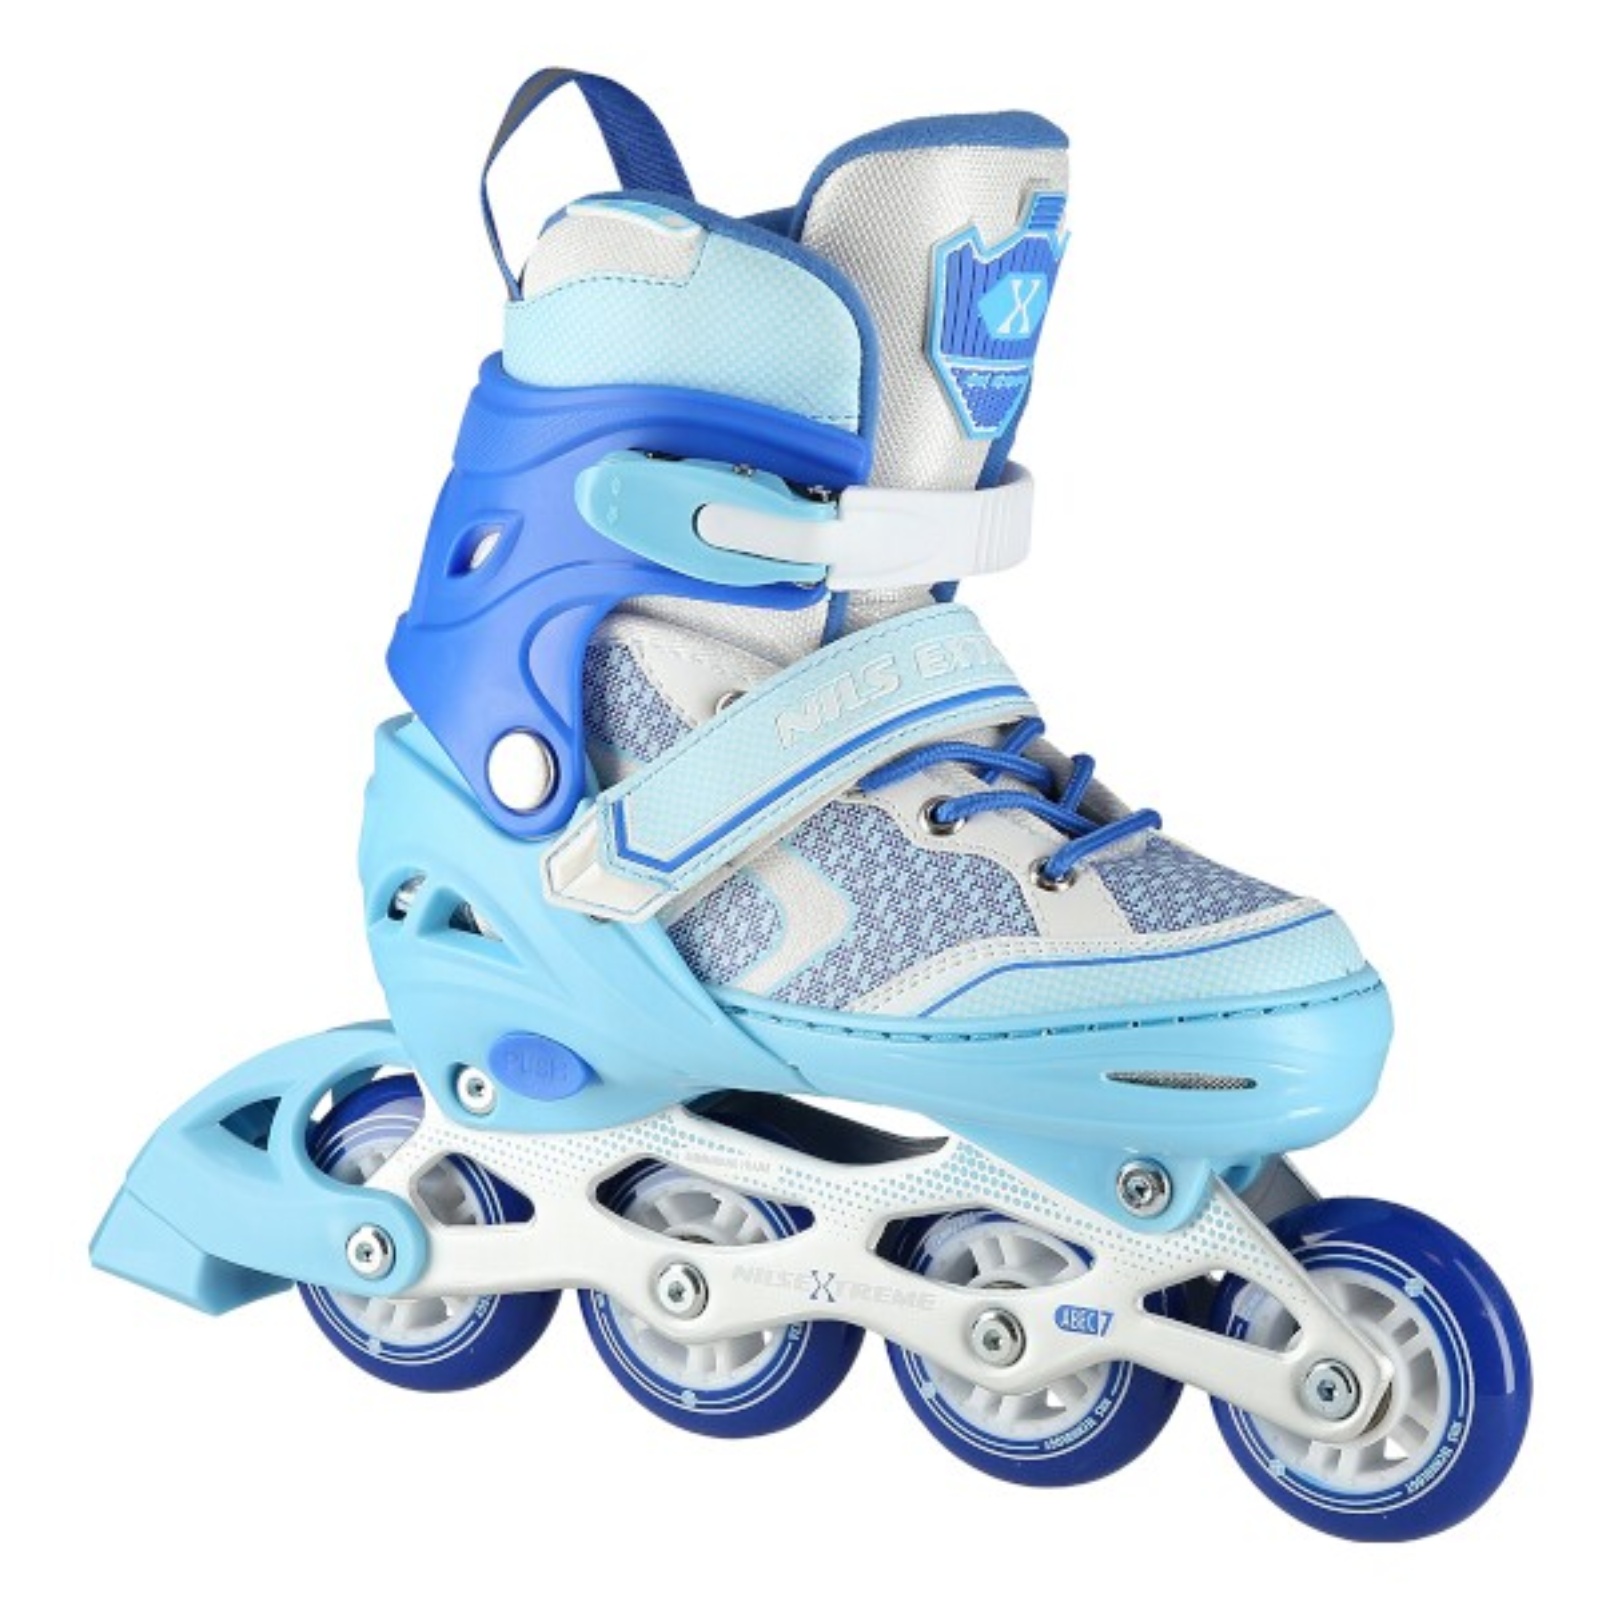 Detské kolieskové korčule NILS Extreme NA 14198 modré - veľ. S (31-34)